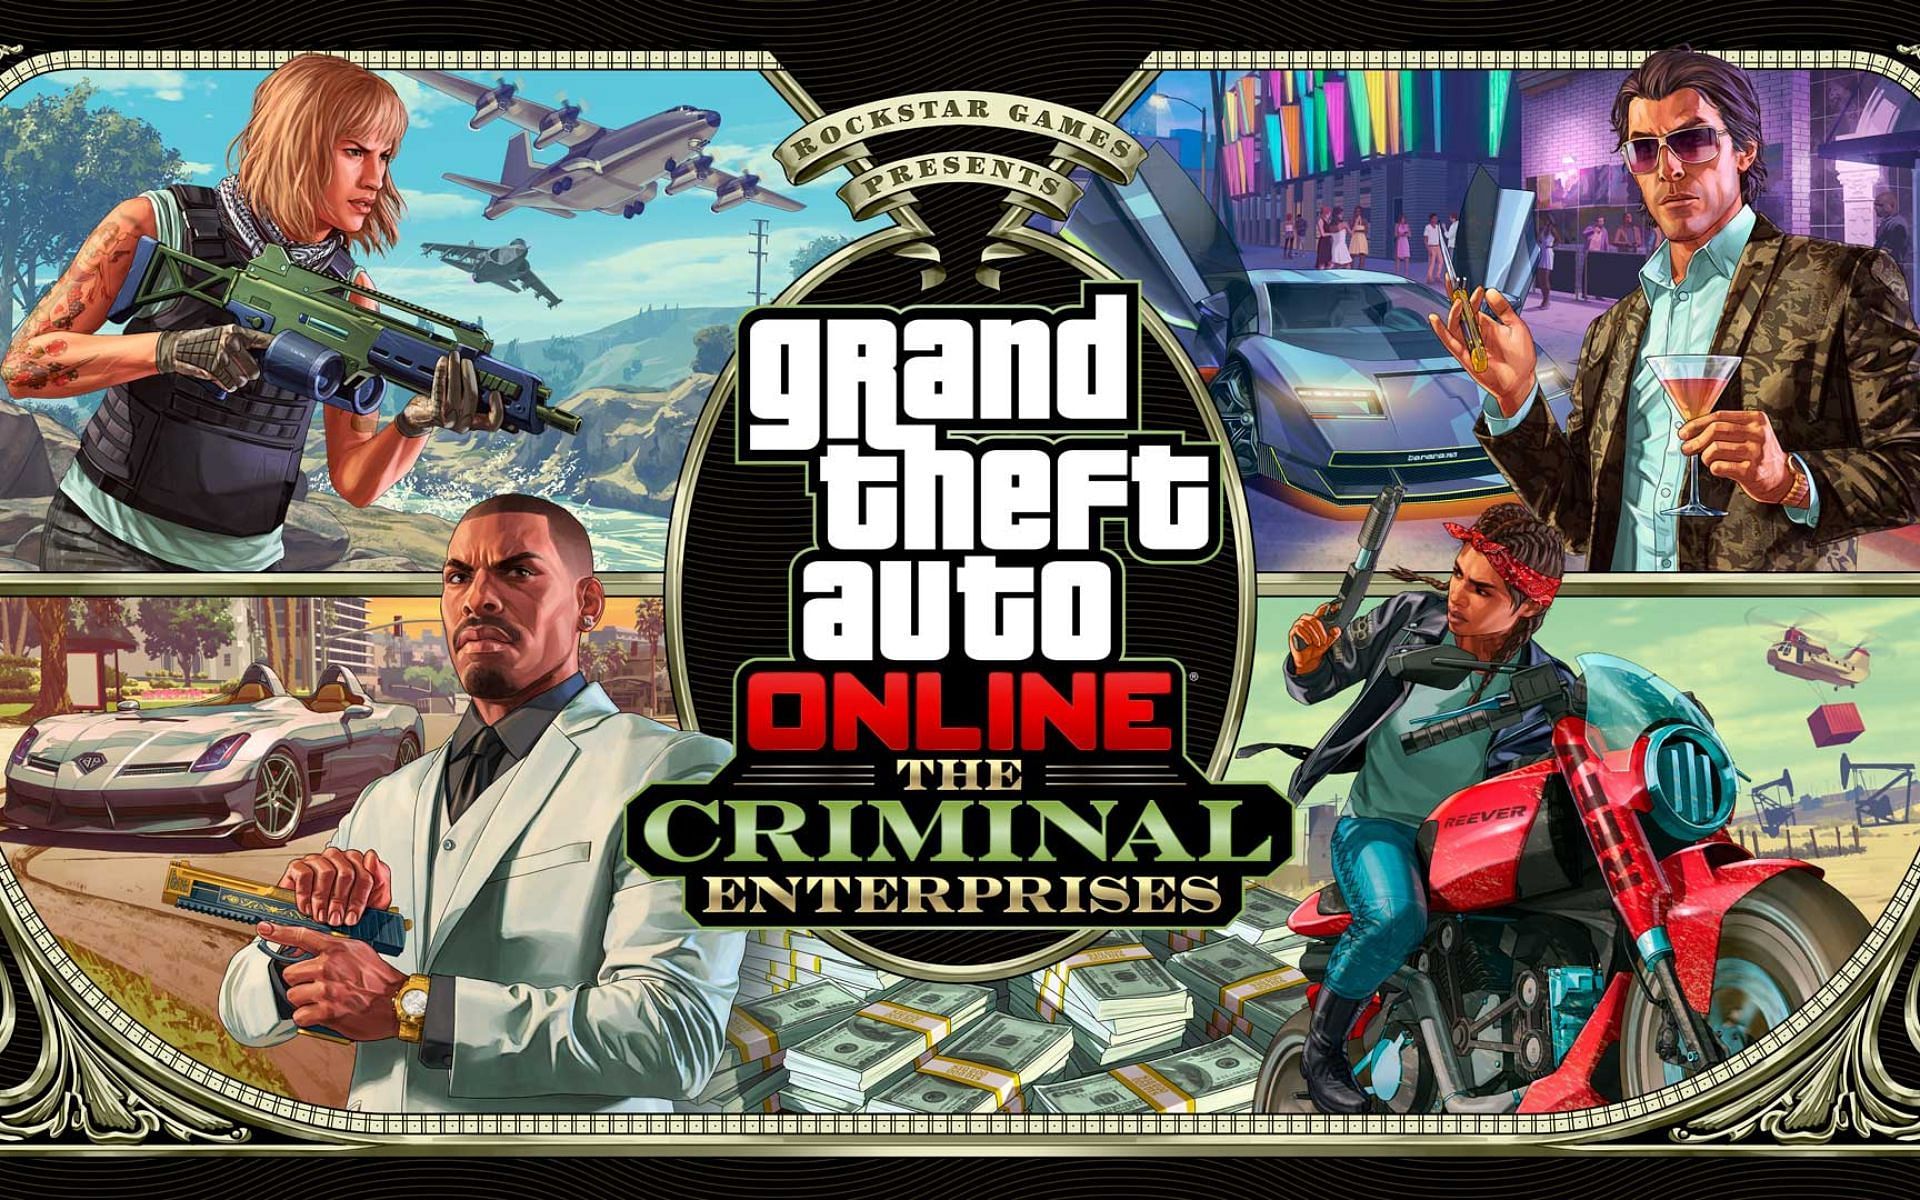 The new DLC is called The Criminal Enterprises (Image via Rockstar Games)